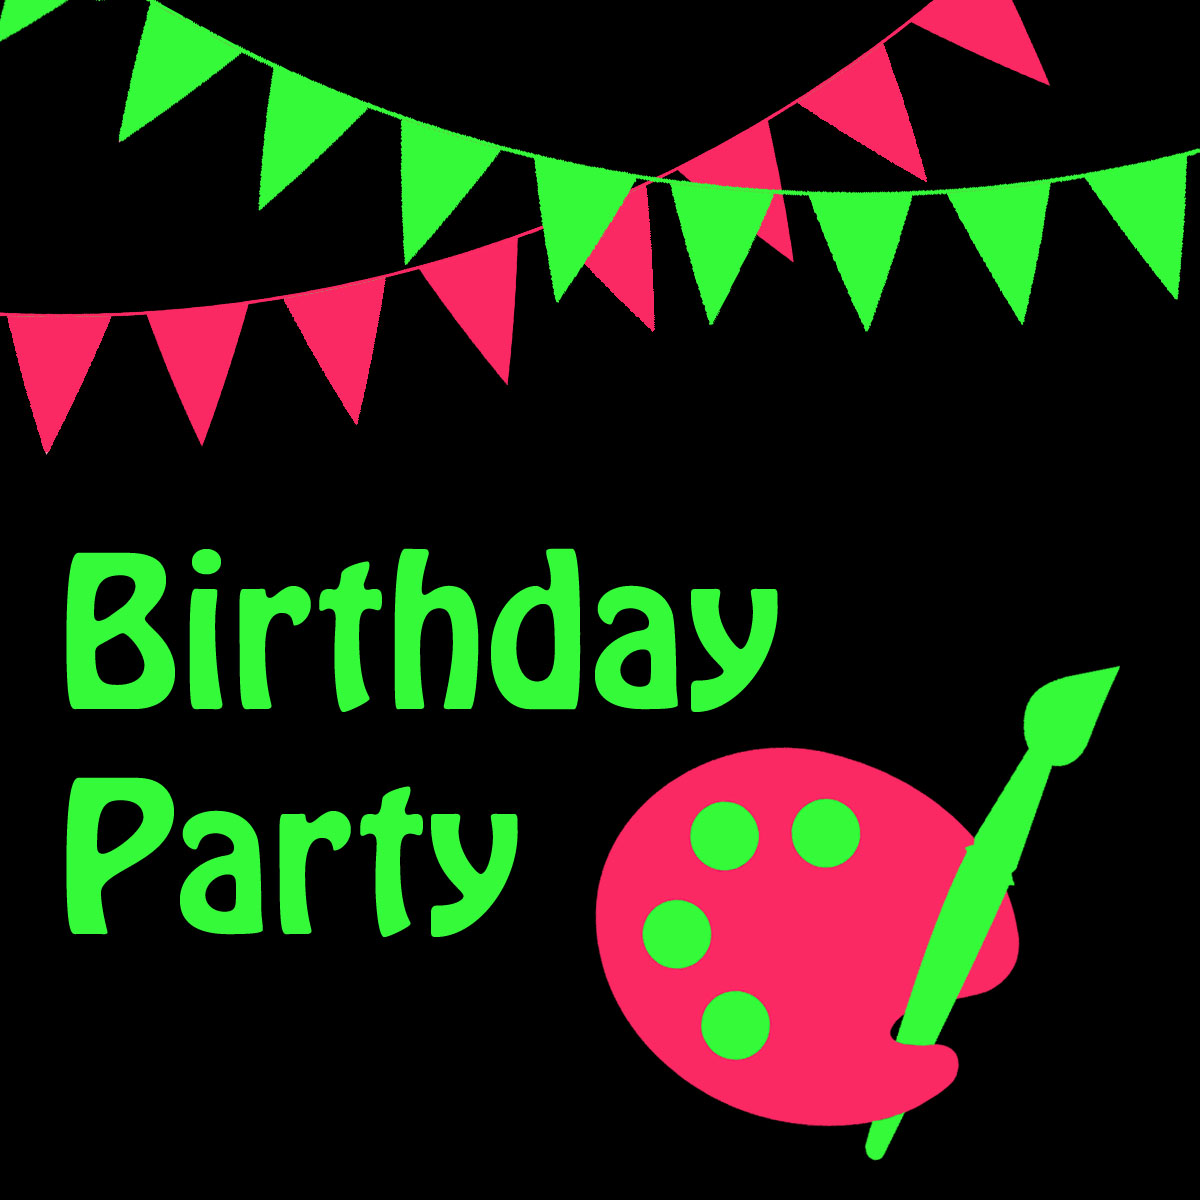 Cece’s Birthday Party